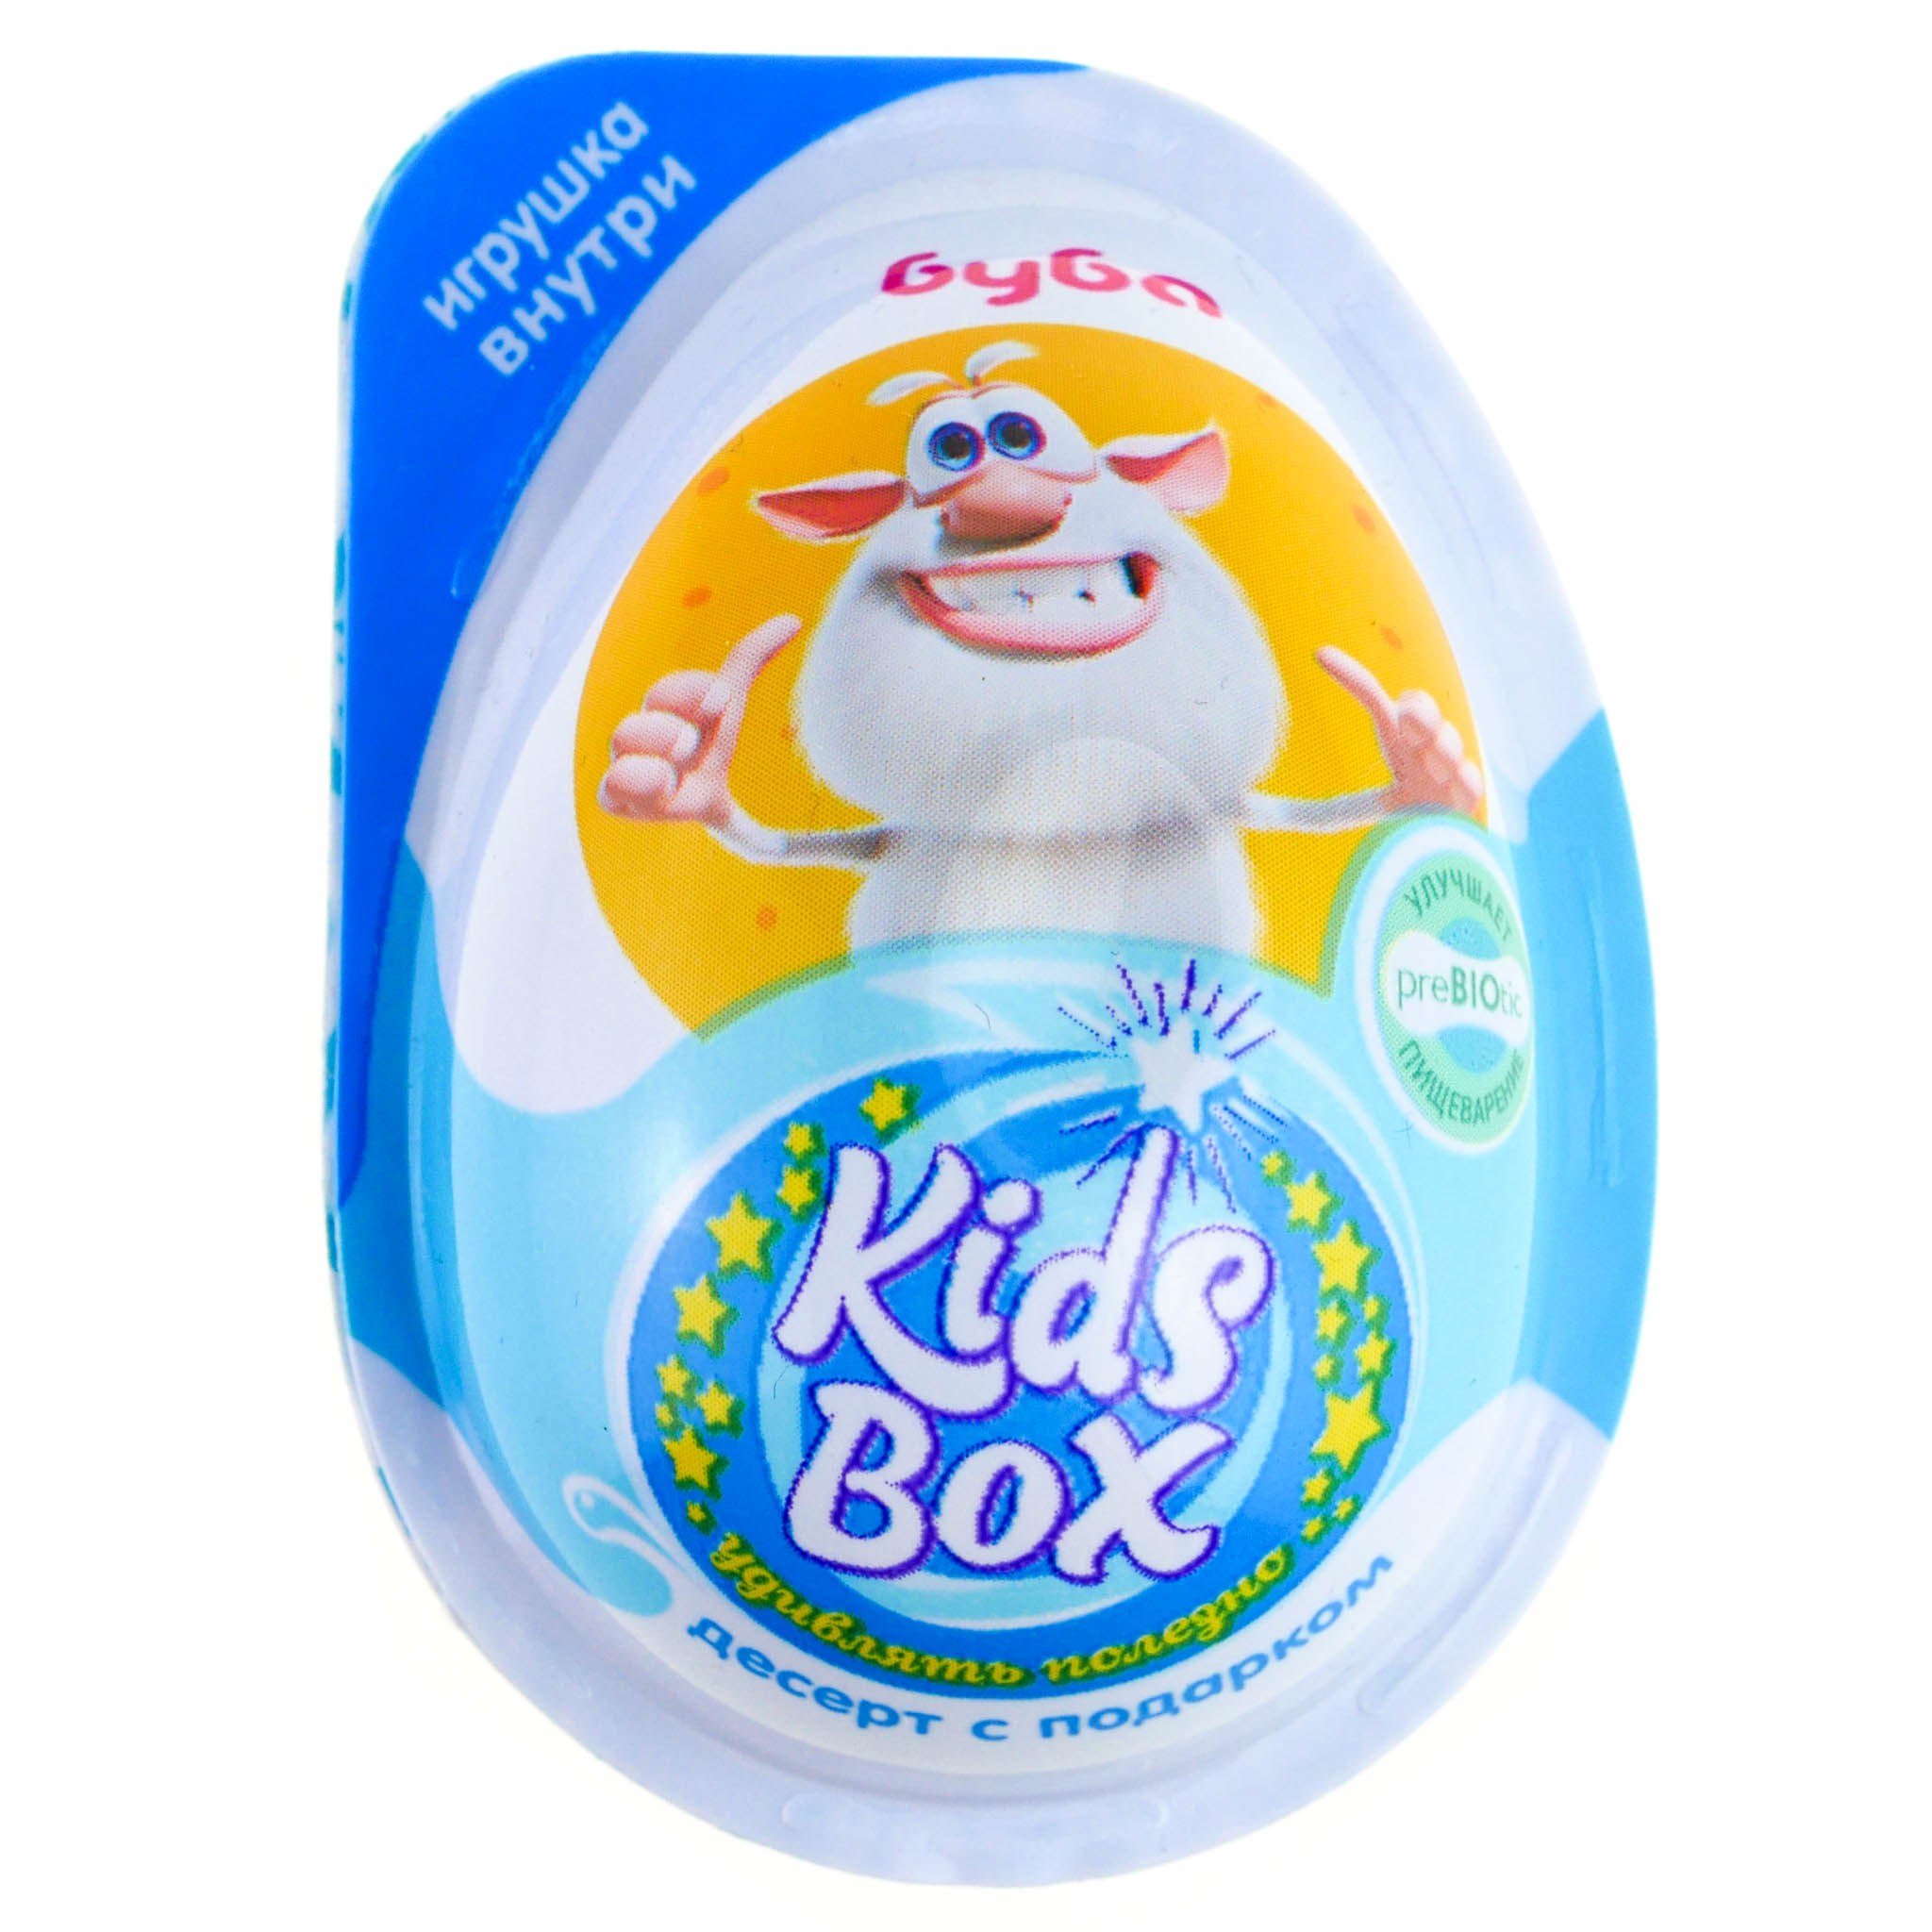 Буба киндер. Яйца Буба Kids Box. Шоколадное яйцо Буба Kids Box. Яйцо десерт с подарком Кидсбокс Буба 20 г. Буба шоколадные яйца Конфитрейд.